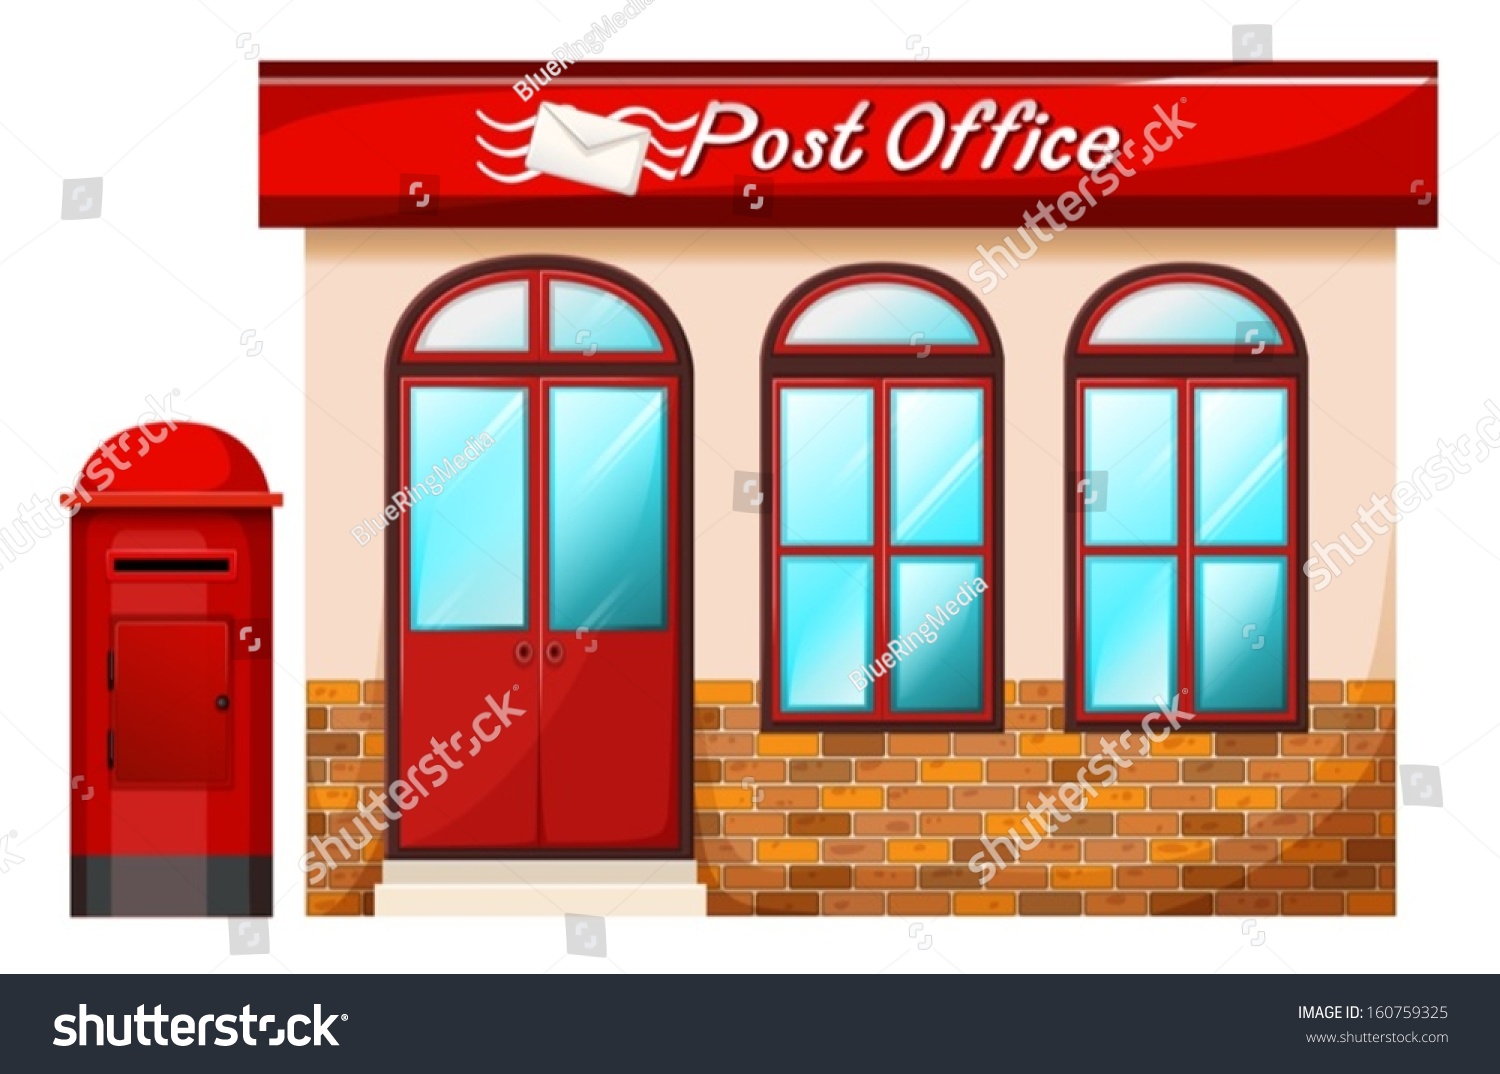 Office clipart, Post office, Stock illustration